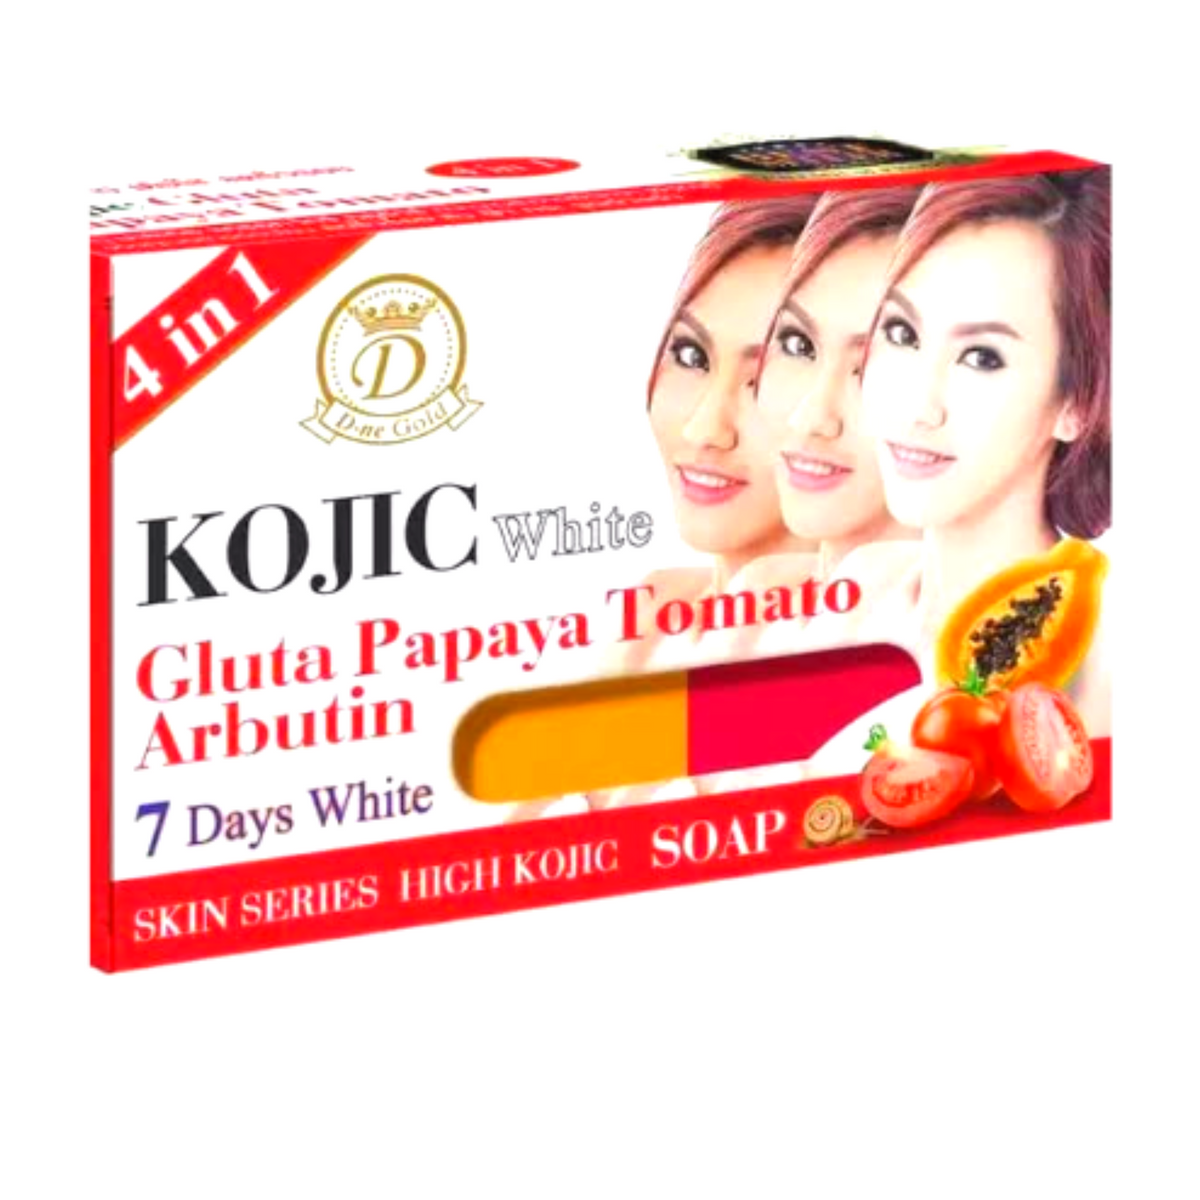 Kojic white Gluta papaya tomato soap